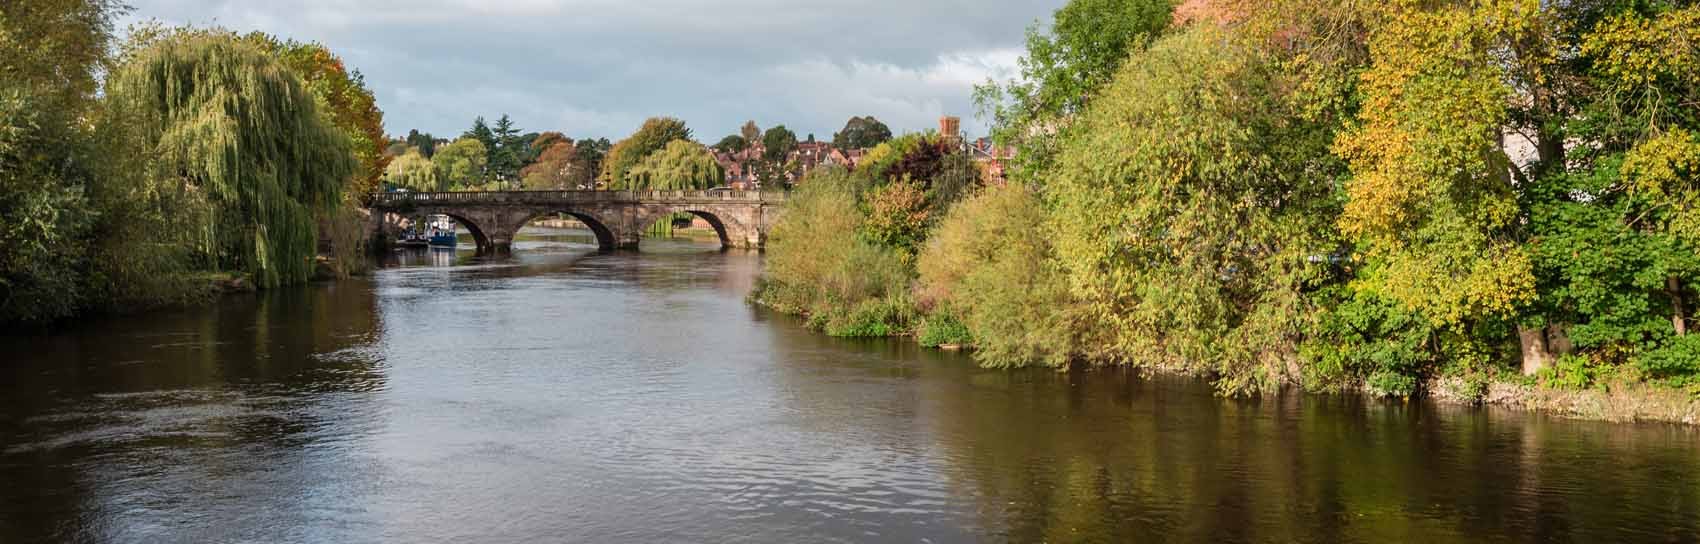 The River Severn at Shrewsbury. Photograph by MFARR